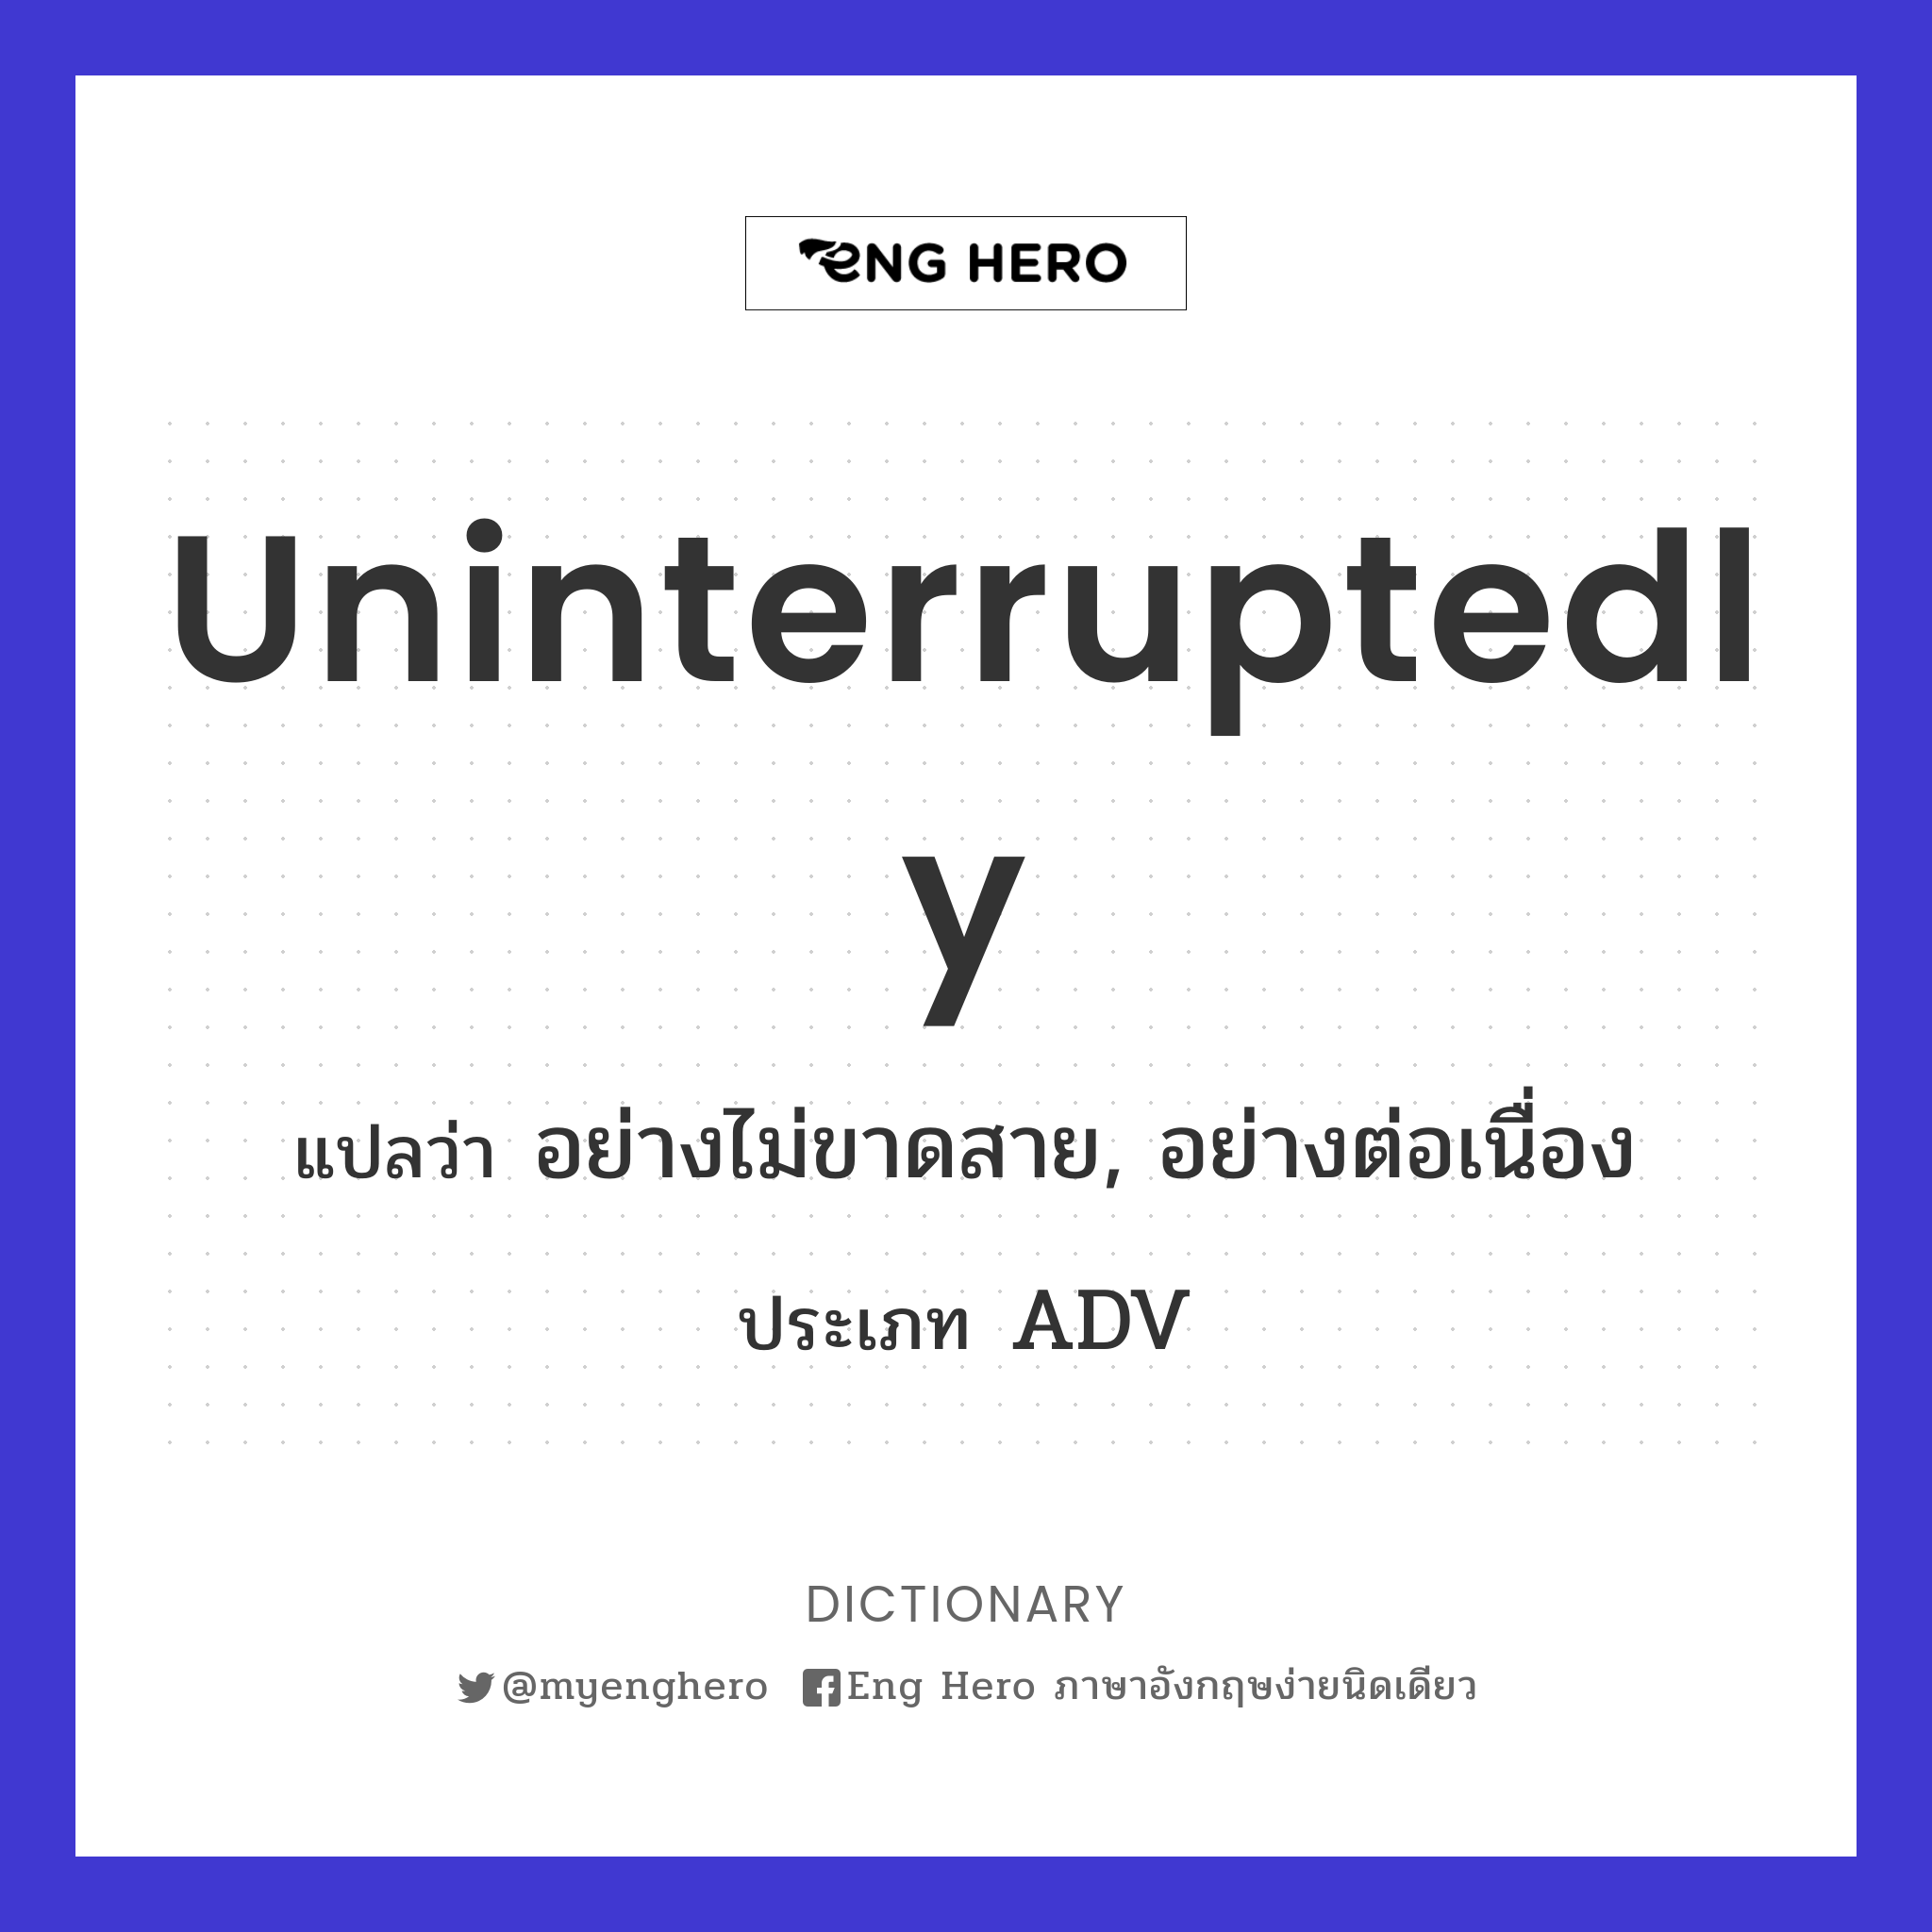 uninterruptedly